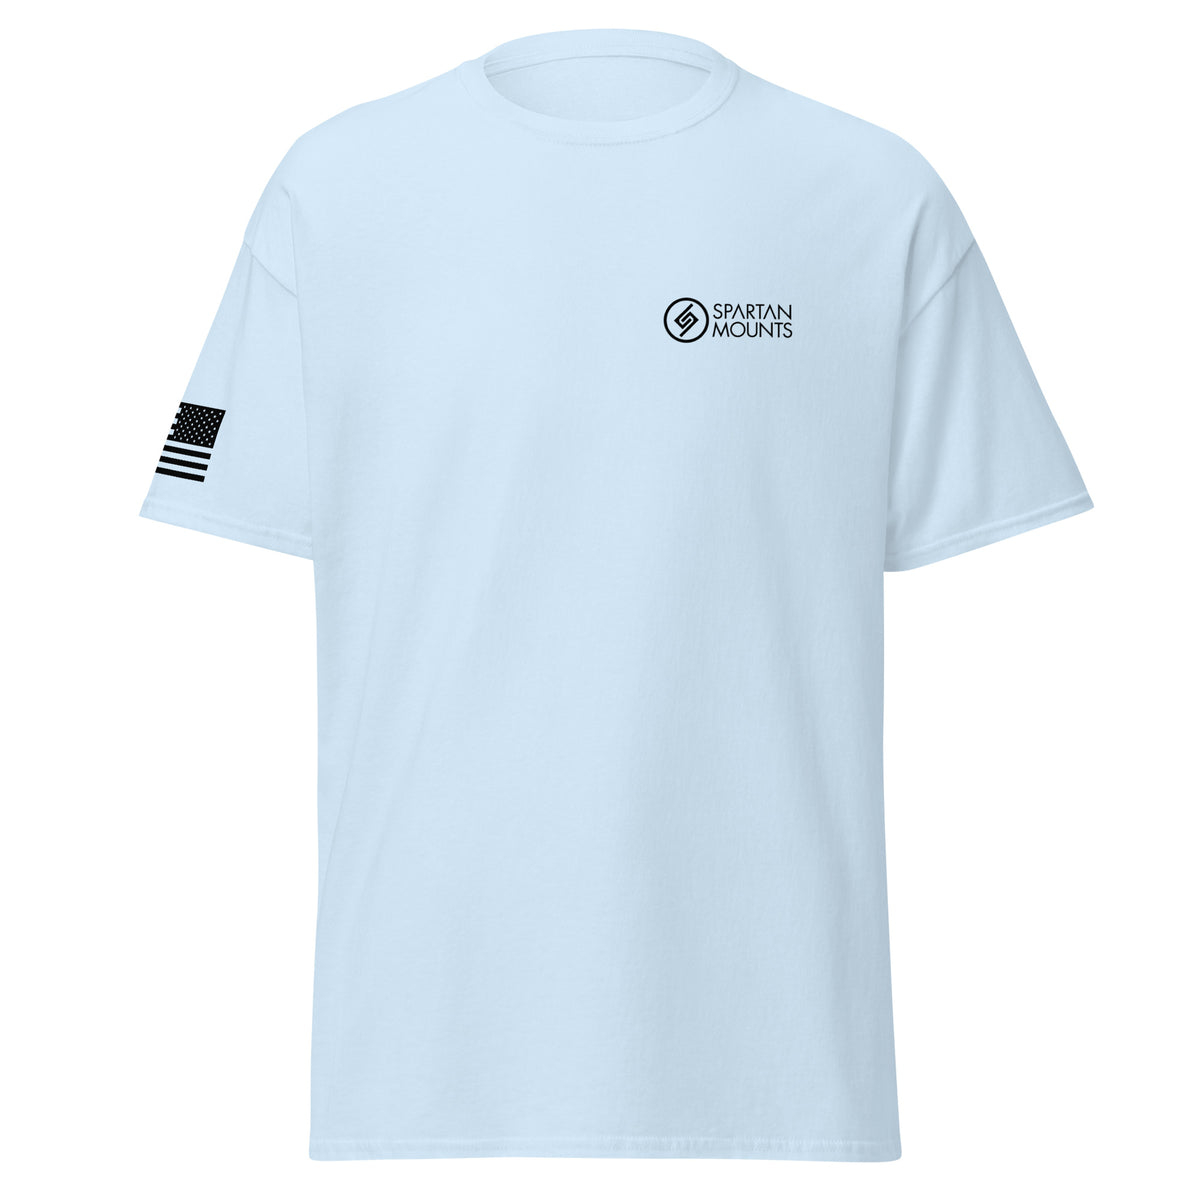 BCG Men's Styled Cotton Crew T-shirt